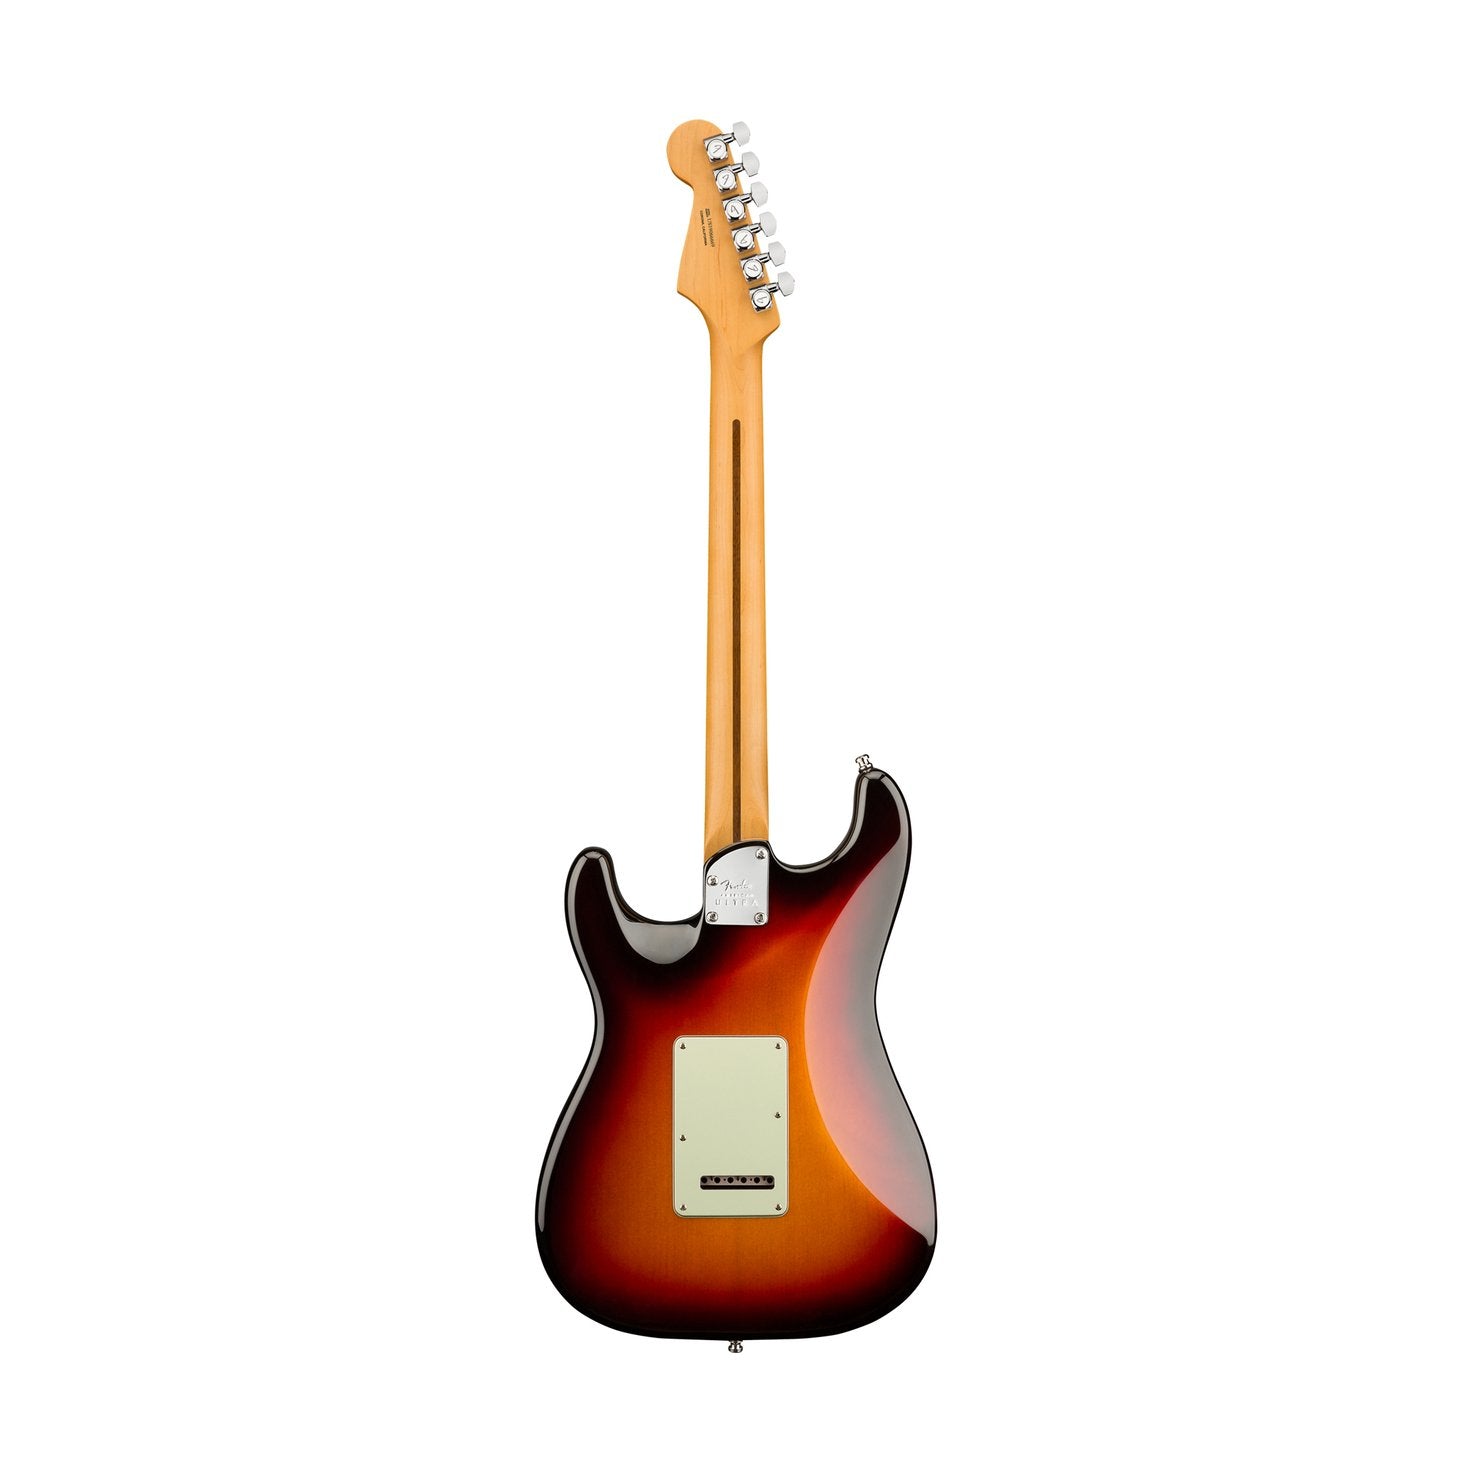 Fender American Ultra HSS Stratocaster Electric Guitar, Maple FB, Ultraburst, FENDER, ELECTRIC GUITAR, fender-electric-guitar-f03-011-8022-712, ZOSO MUSIC SDN BHD